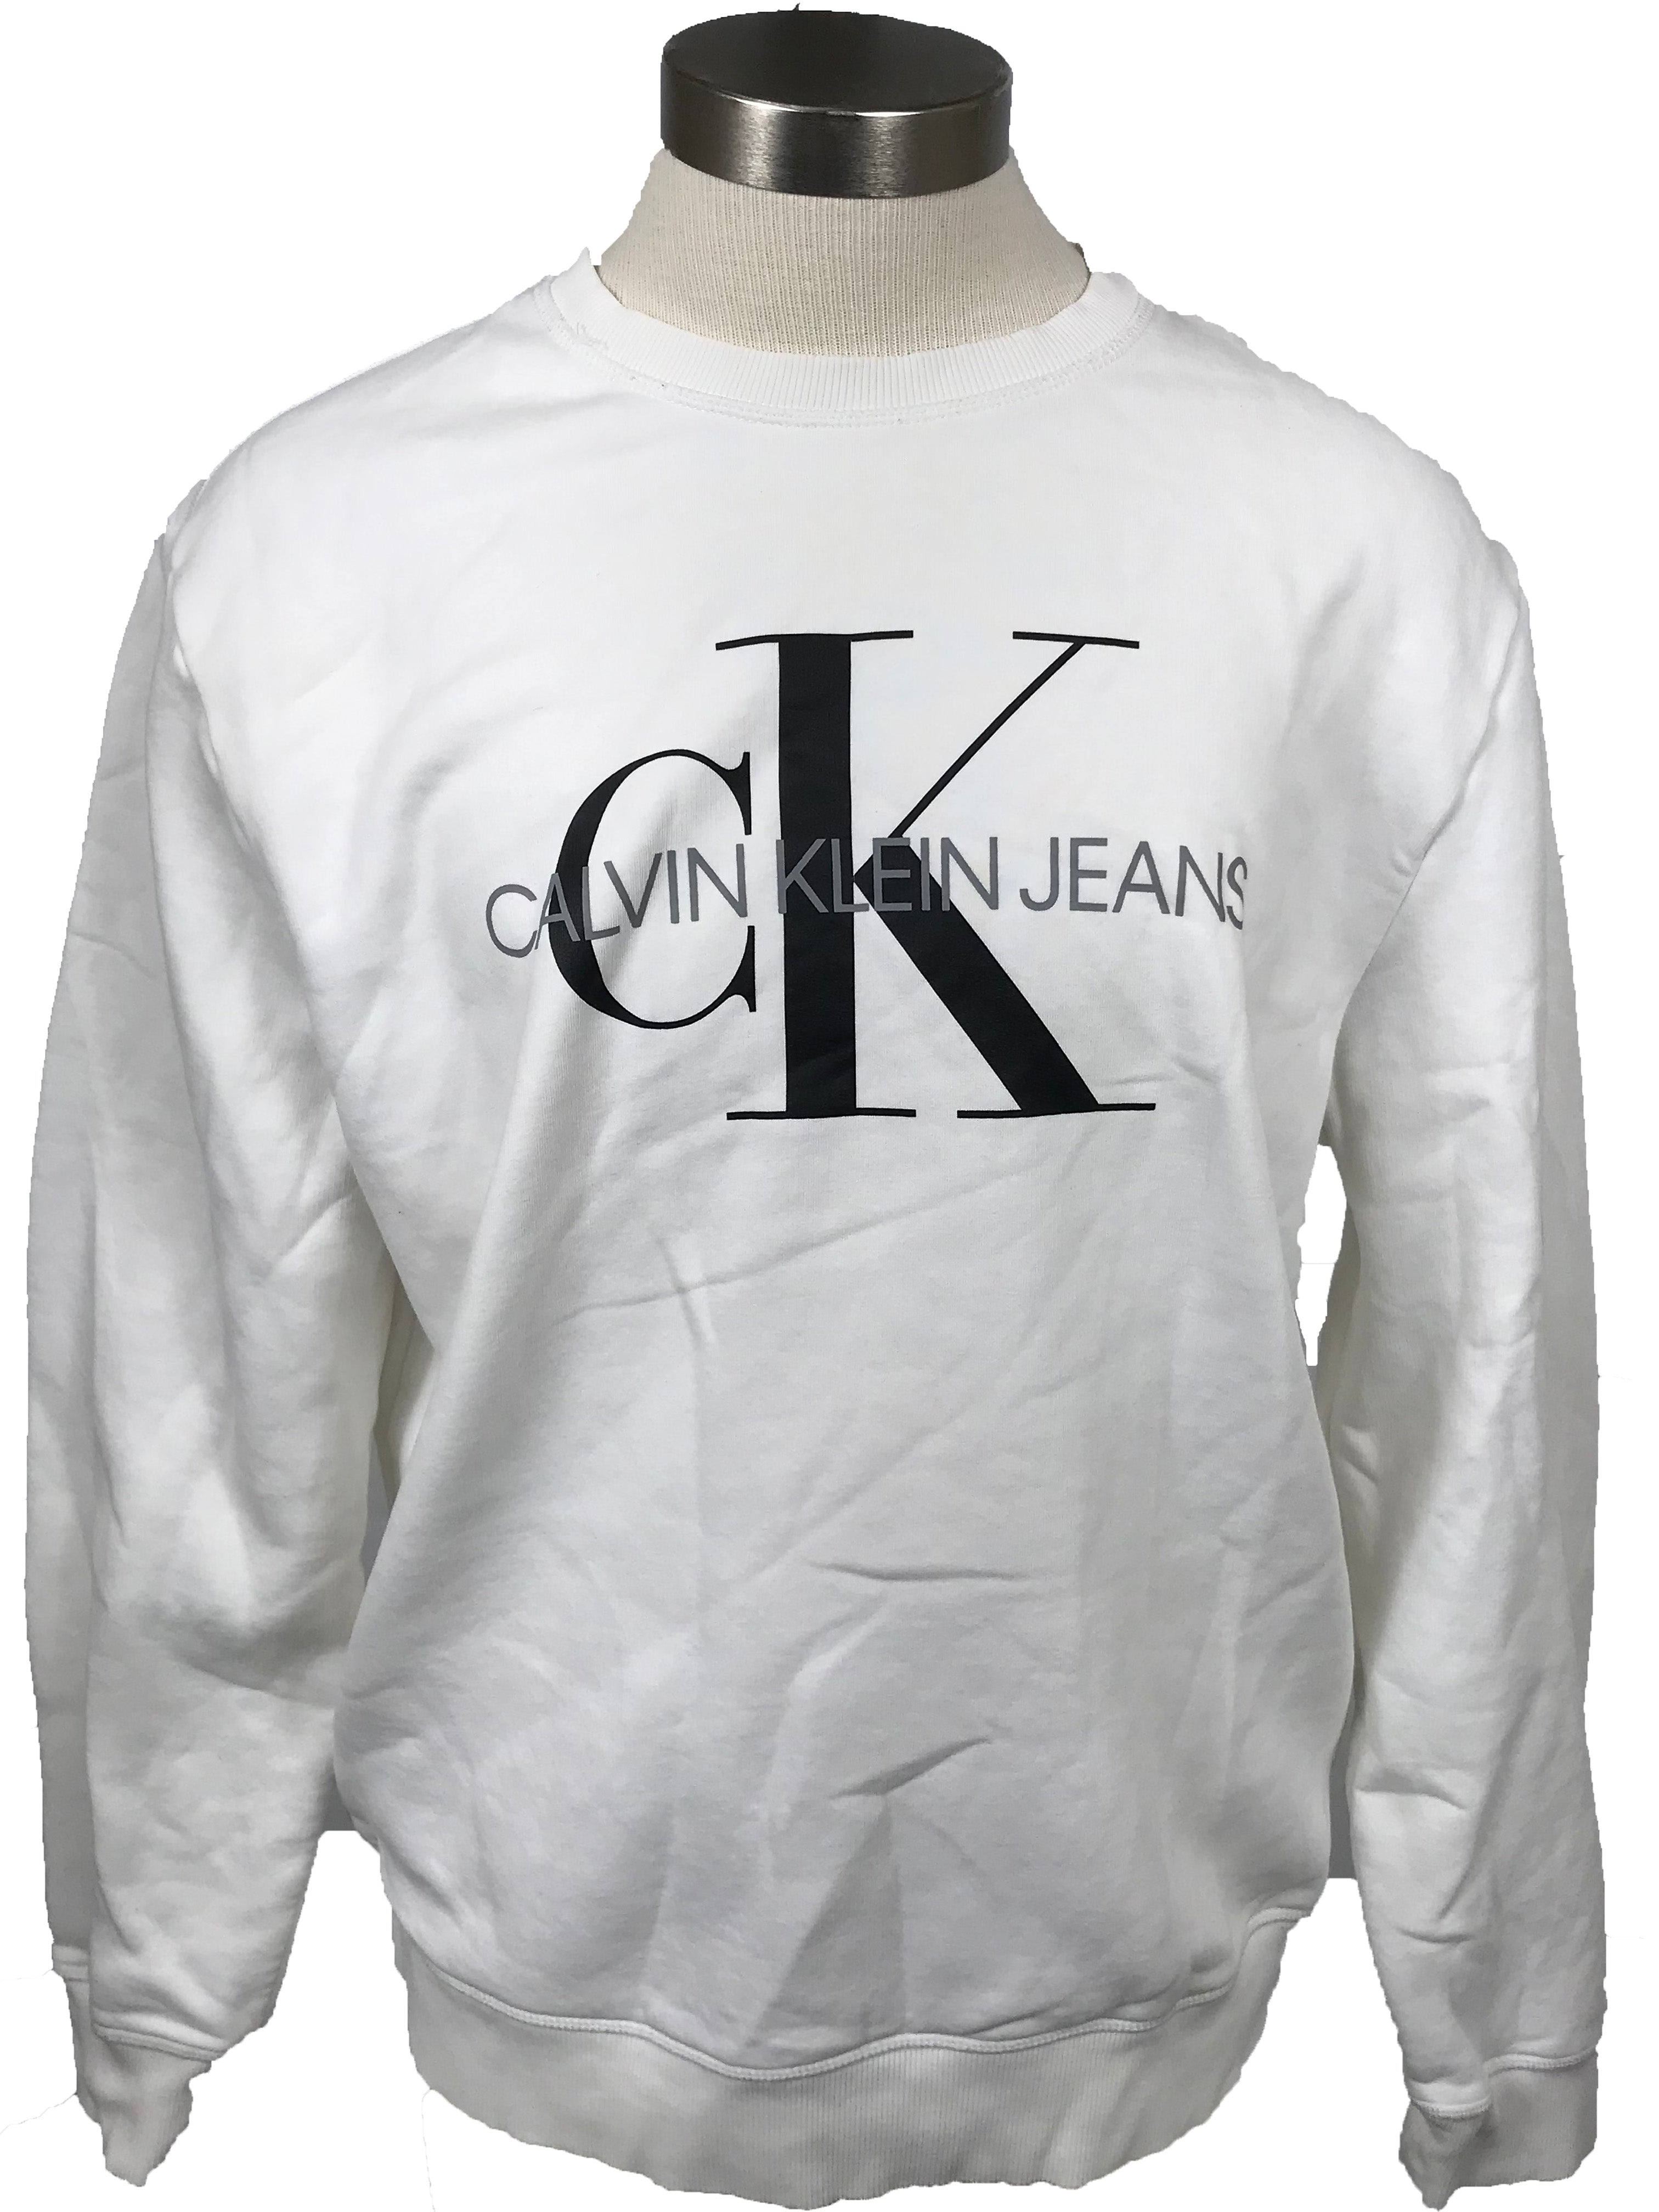 Calvin Klein Jeans White Sweatshirt Men's Size XL